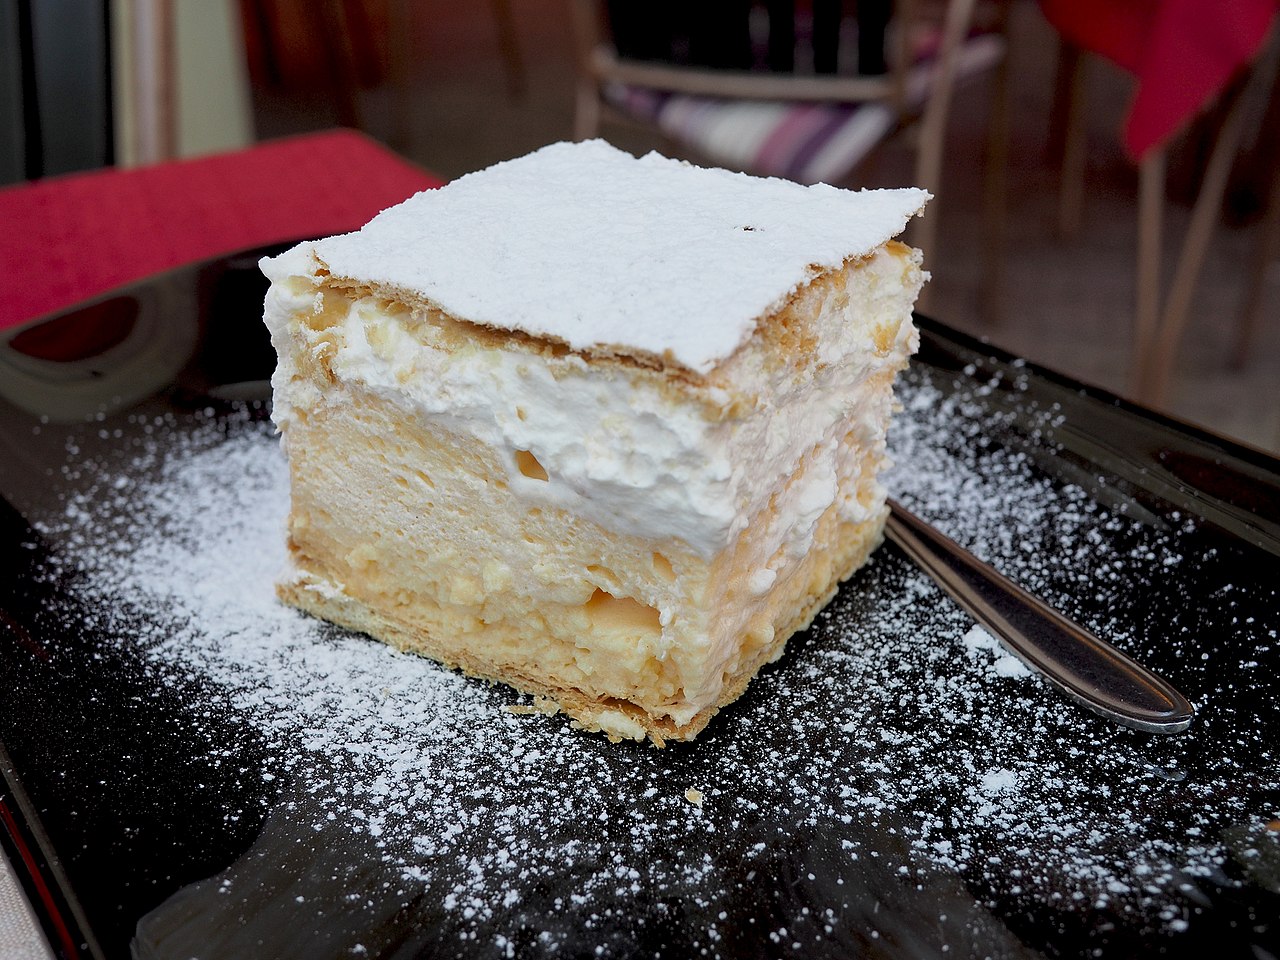 kremsnita cake made from layers of custard and cream